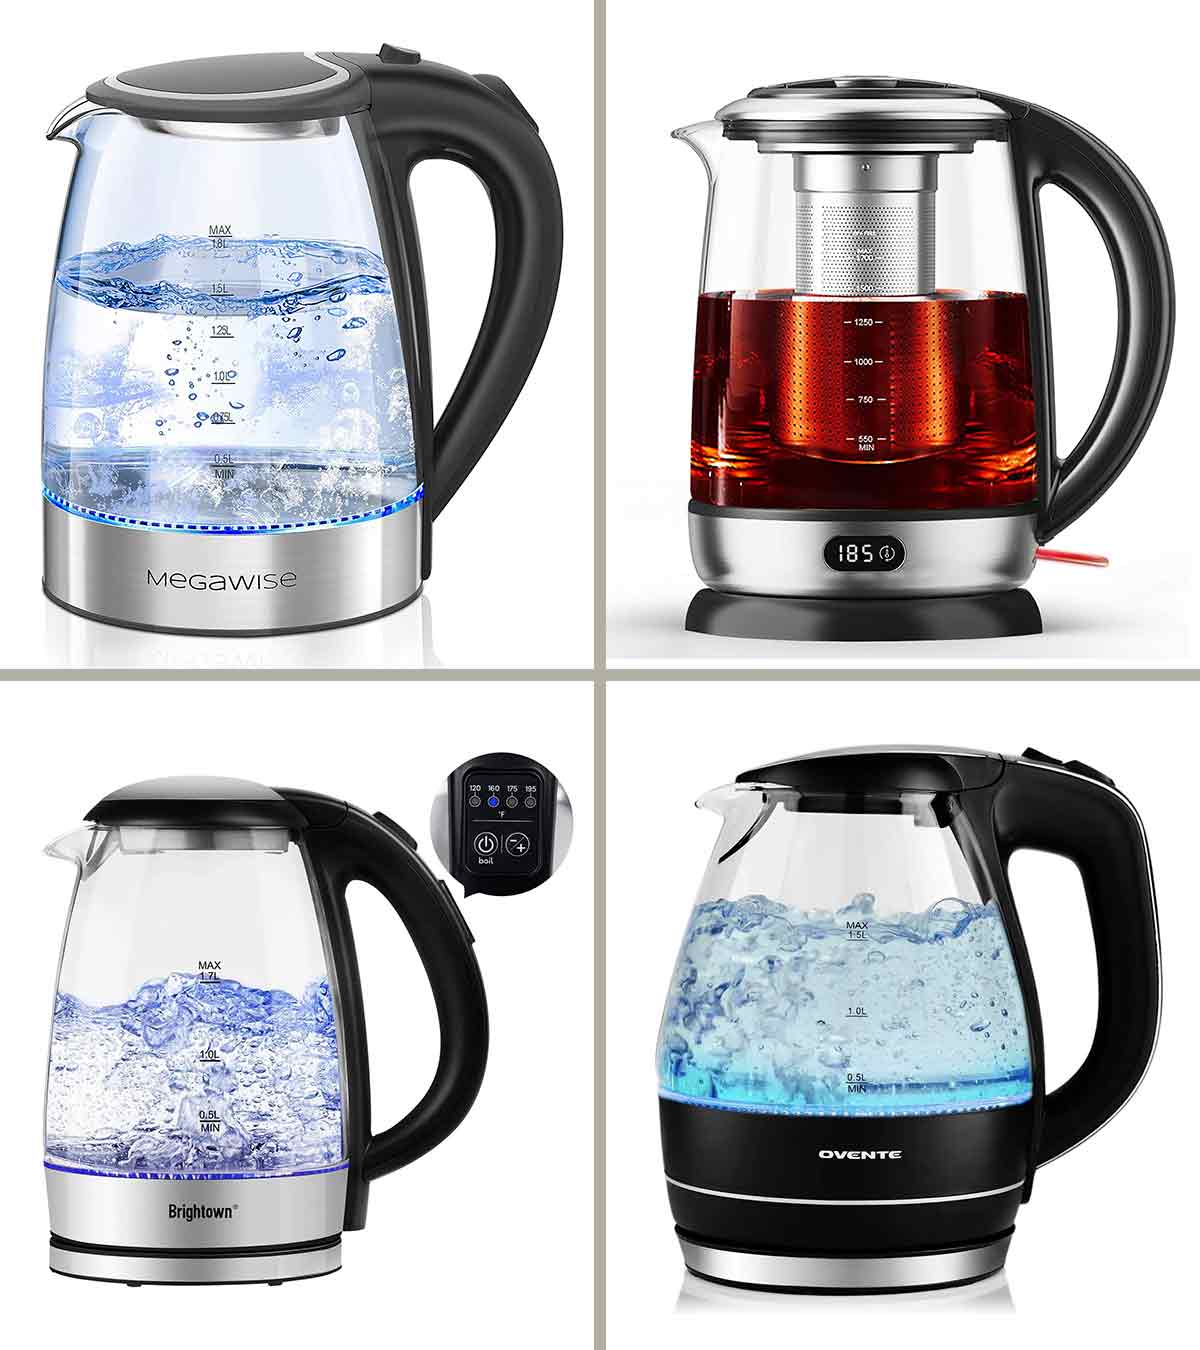 https://www.momjunction.com/wp-content/uploads/2021/03/15-Best-Glass-Tea-Kettles-To-Buy-in-2021.jpg